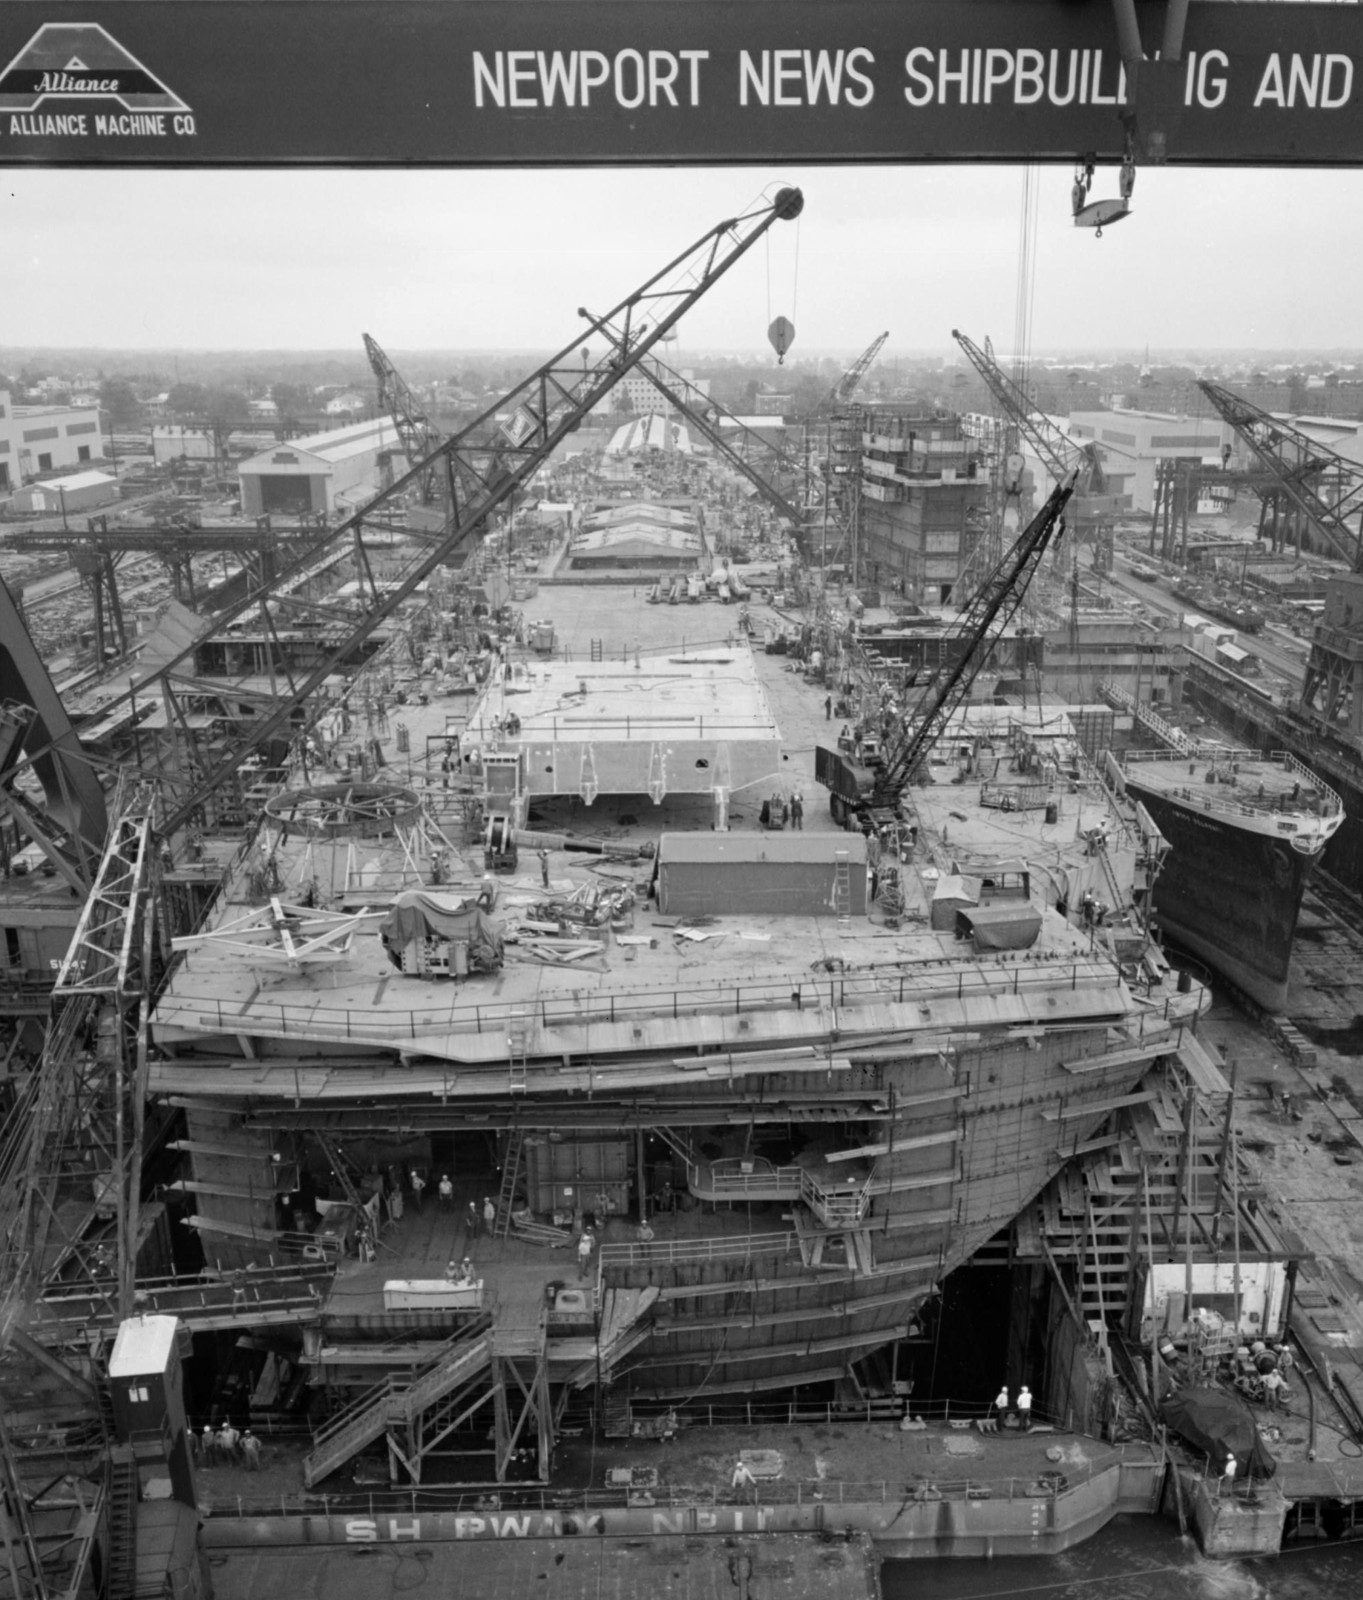 cvn-68 uss nimitz aircraft carrier us navy newport news shipbuilding virginia 02